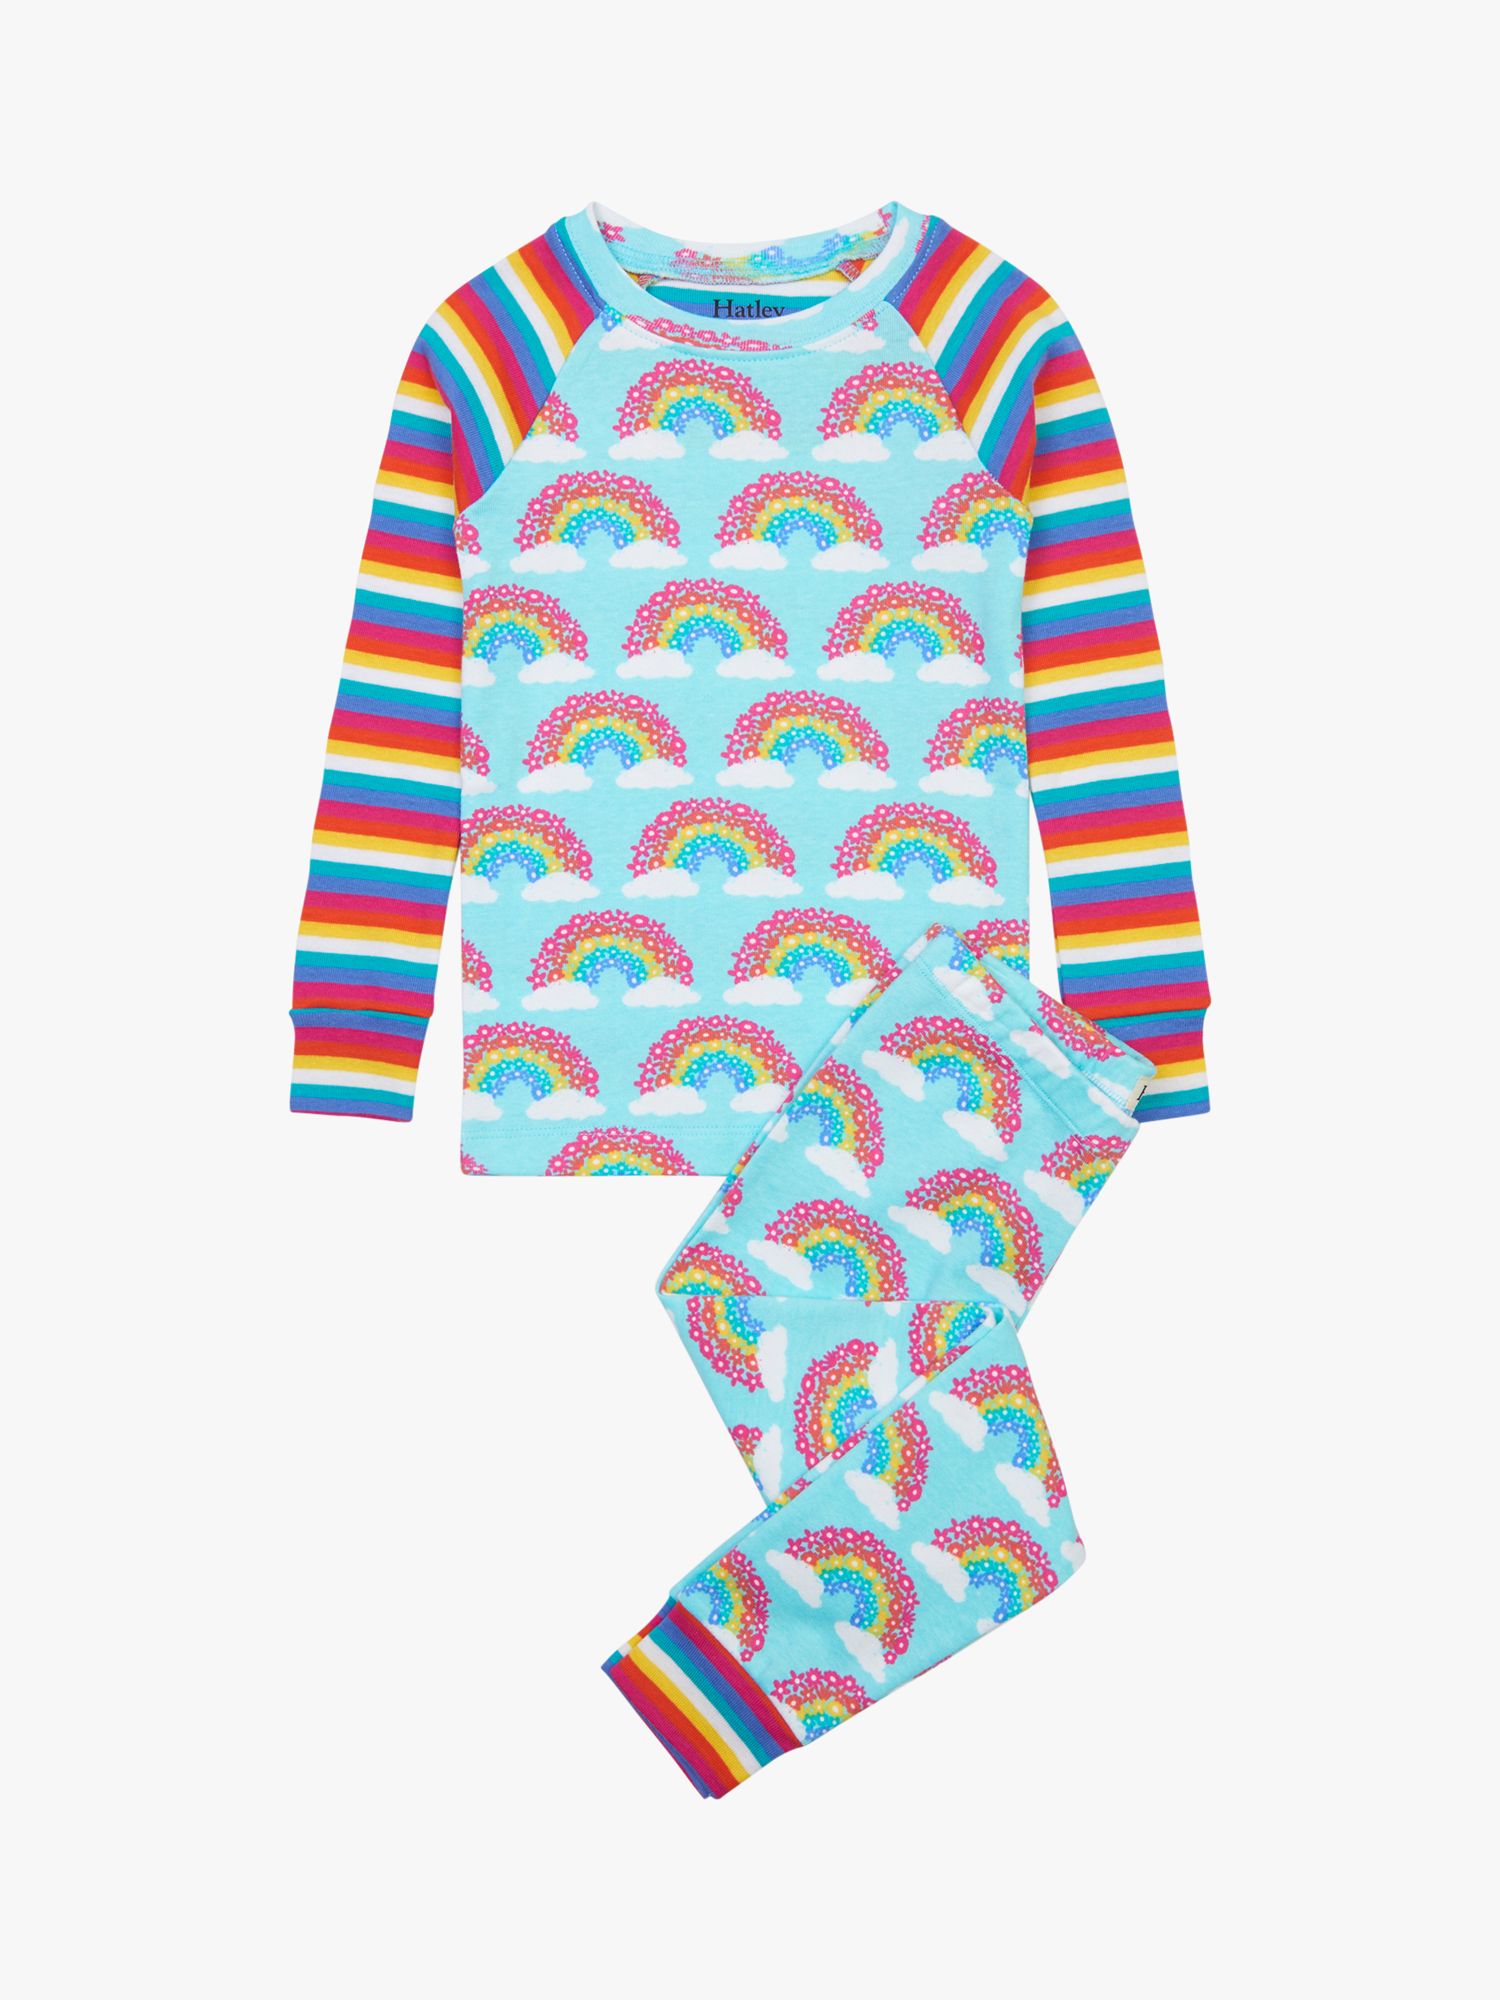 Hatley Girls Organic Cotton Rainbow Print Pyjamas Blue Multi At John Lewis Partners